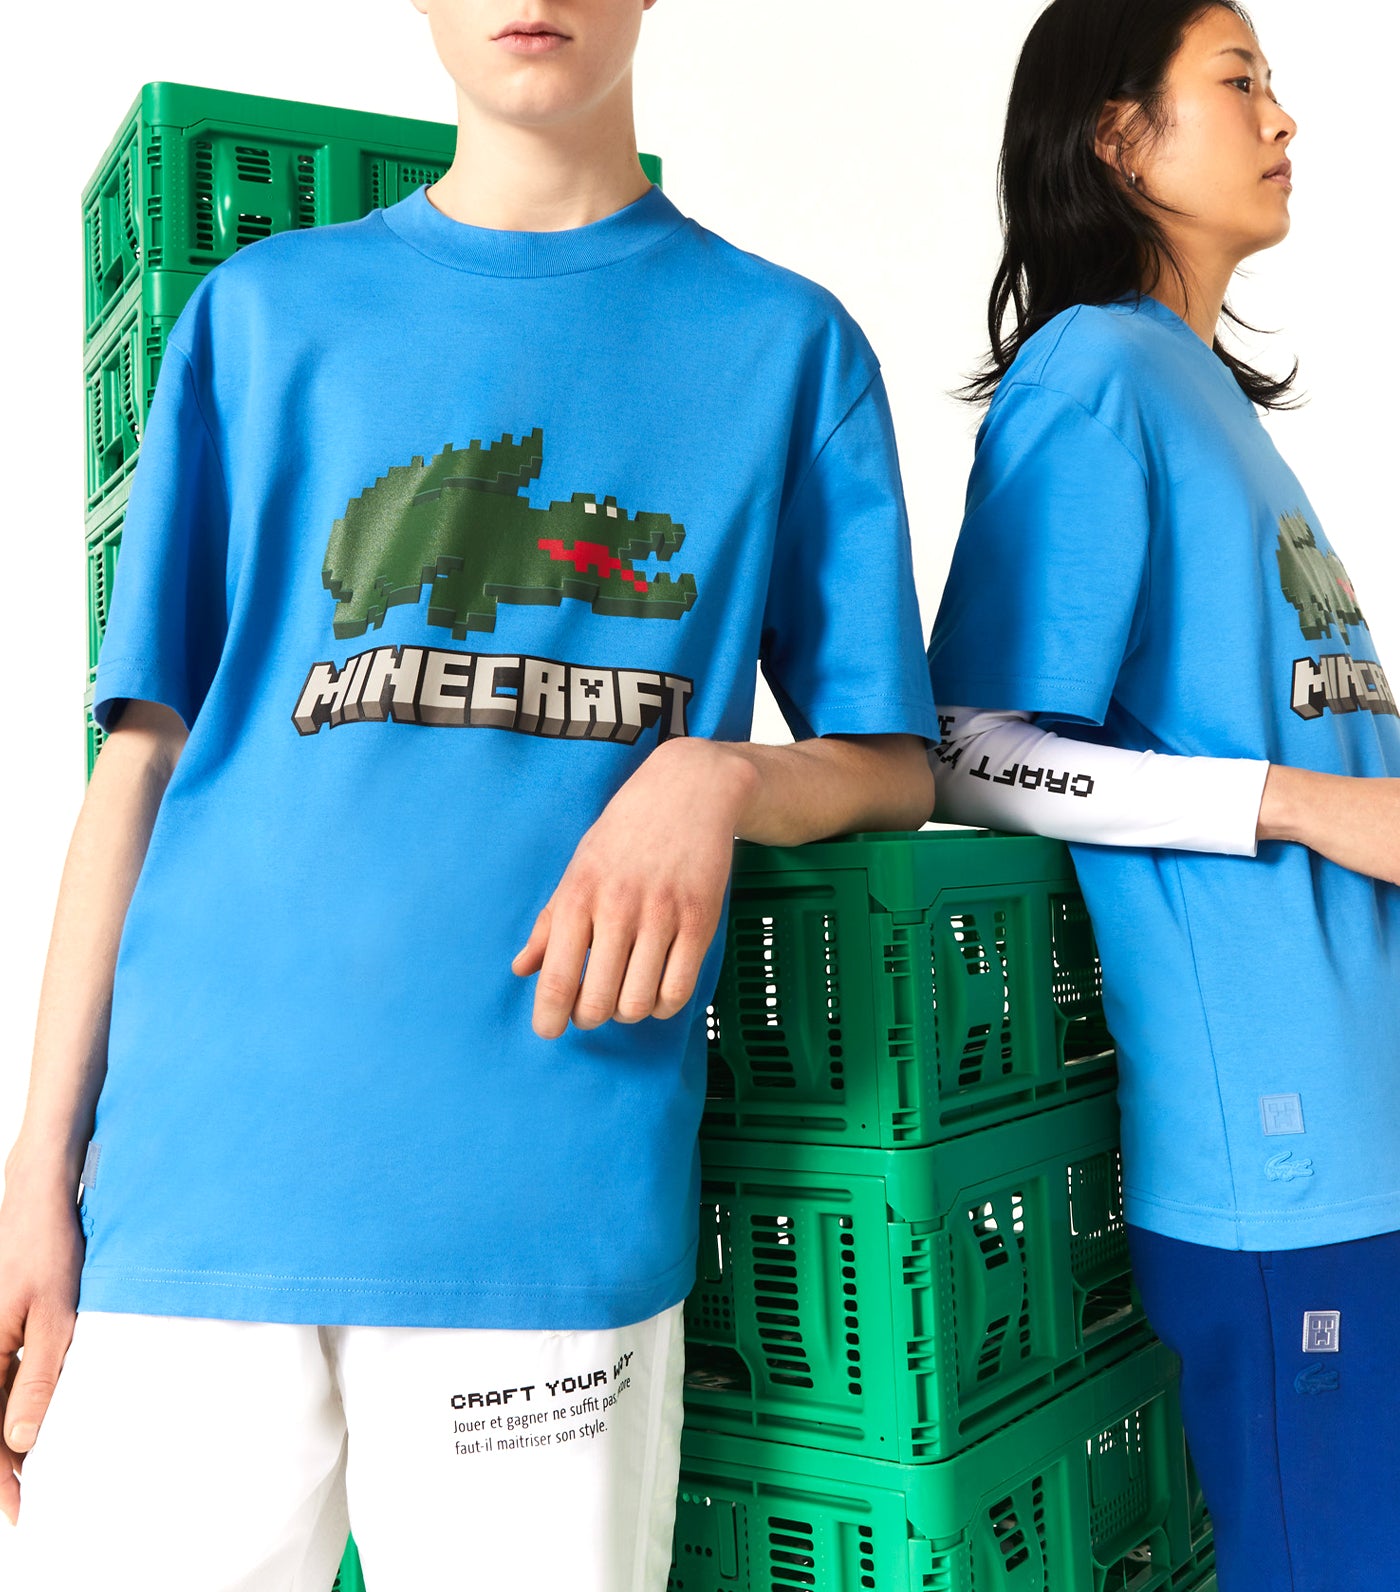 Unisex Lacoste x Minecraft Print Organic Cotton T-Shirt Ethereal